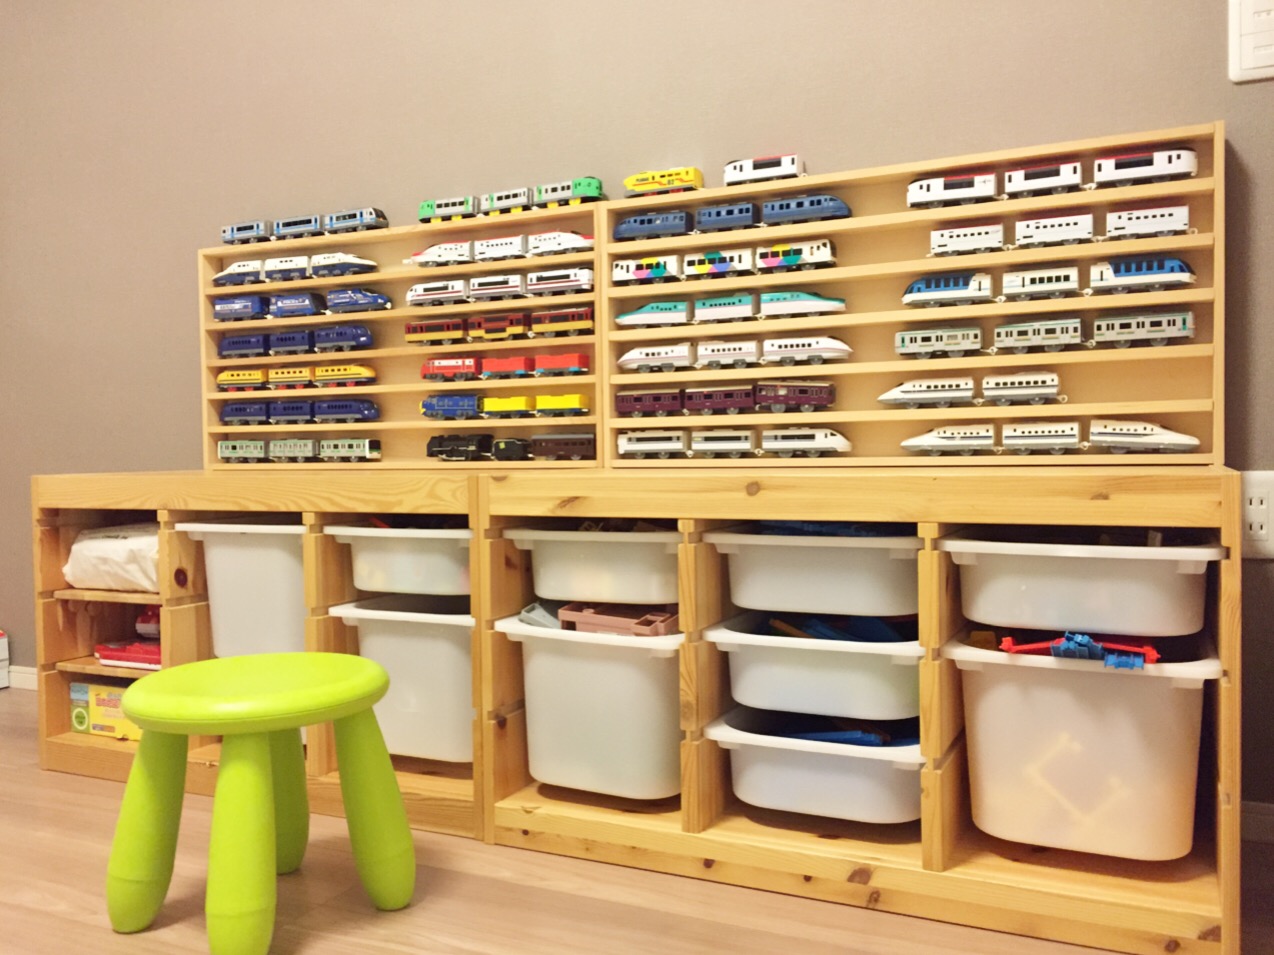 Ikeaでつくる子供部屋 おもちゃの収納編 いちごのうた